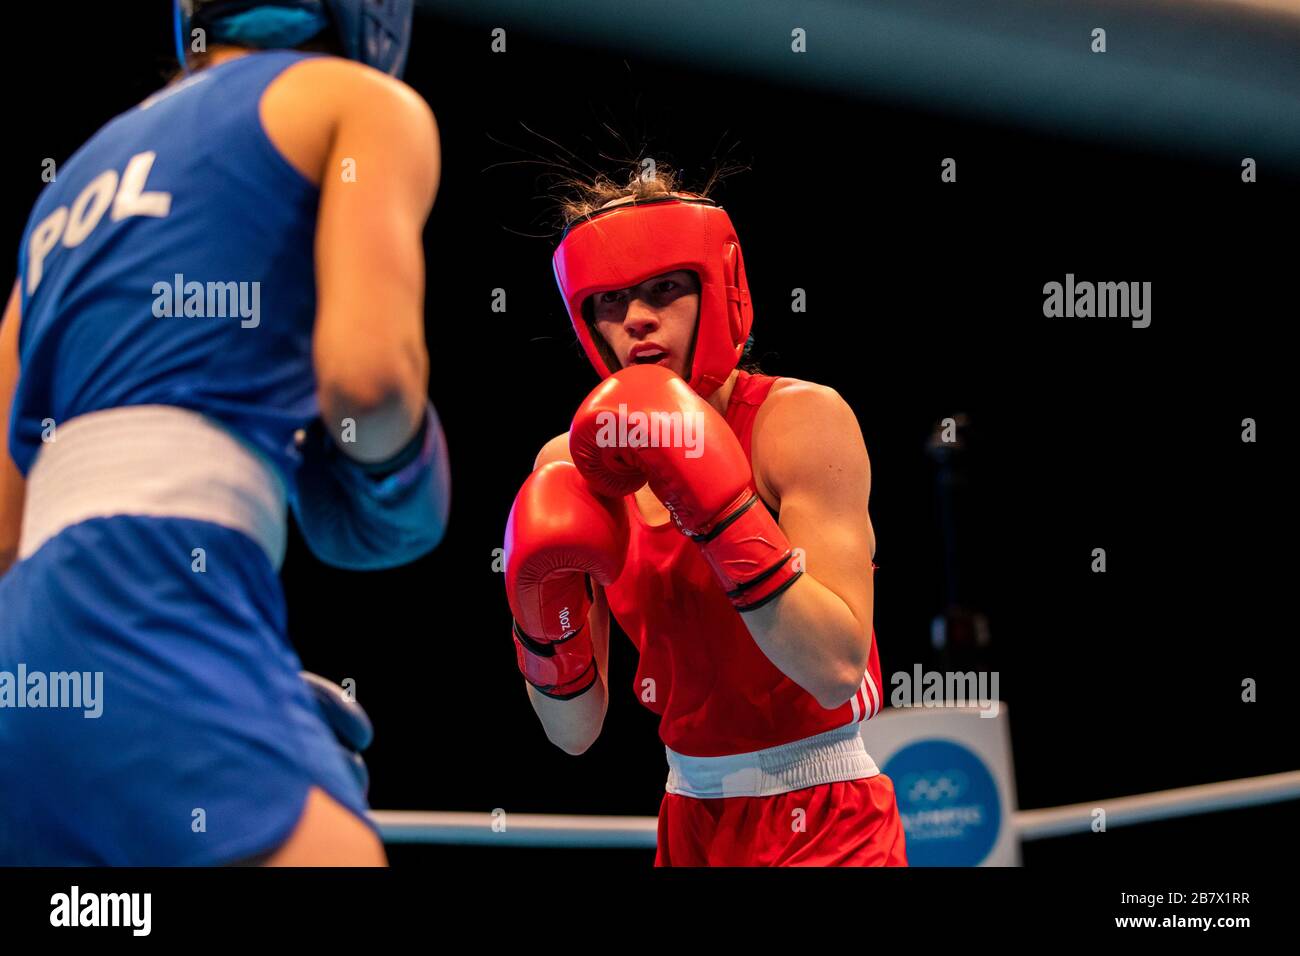 London, UK. 14-03-20. Cristina-Paula Cosma (ROU) RED fights Aneta Rygielska (POL) BLUE during the Road to Tokyo European Olympic Boxing Qualification. Stock Photo